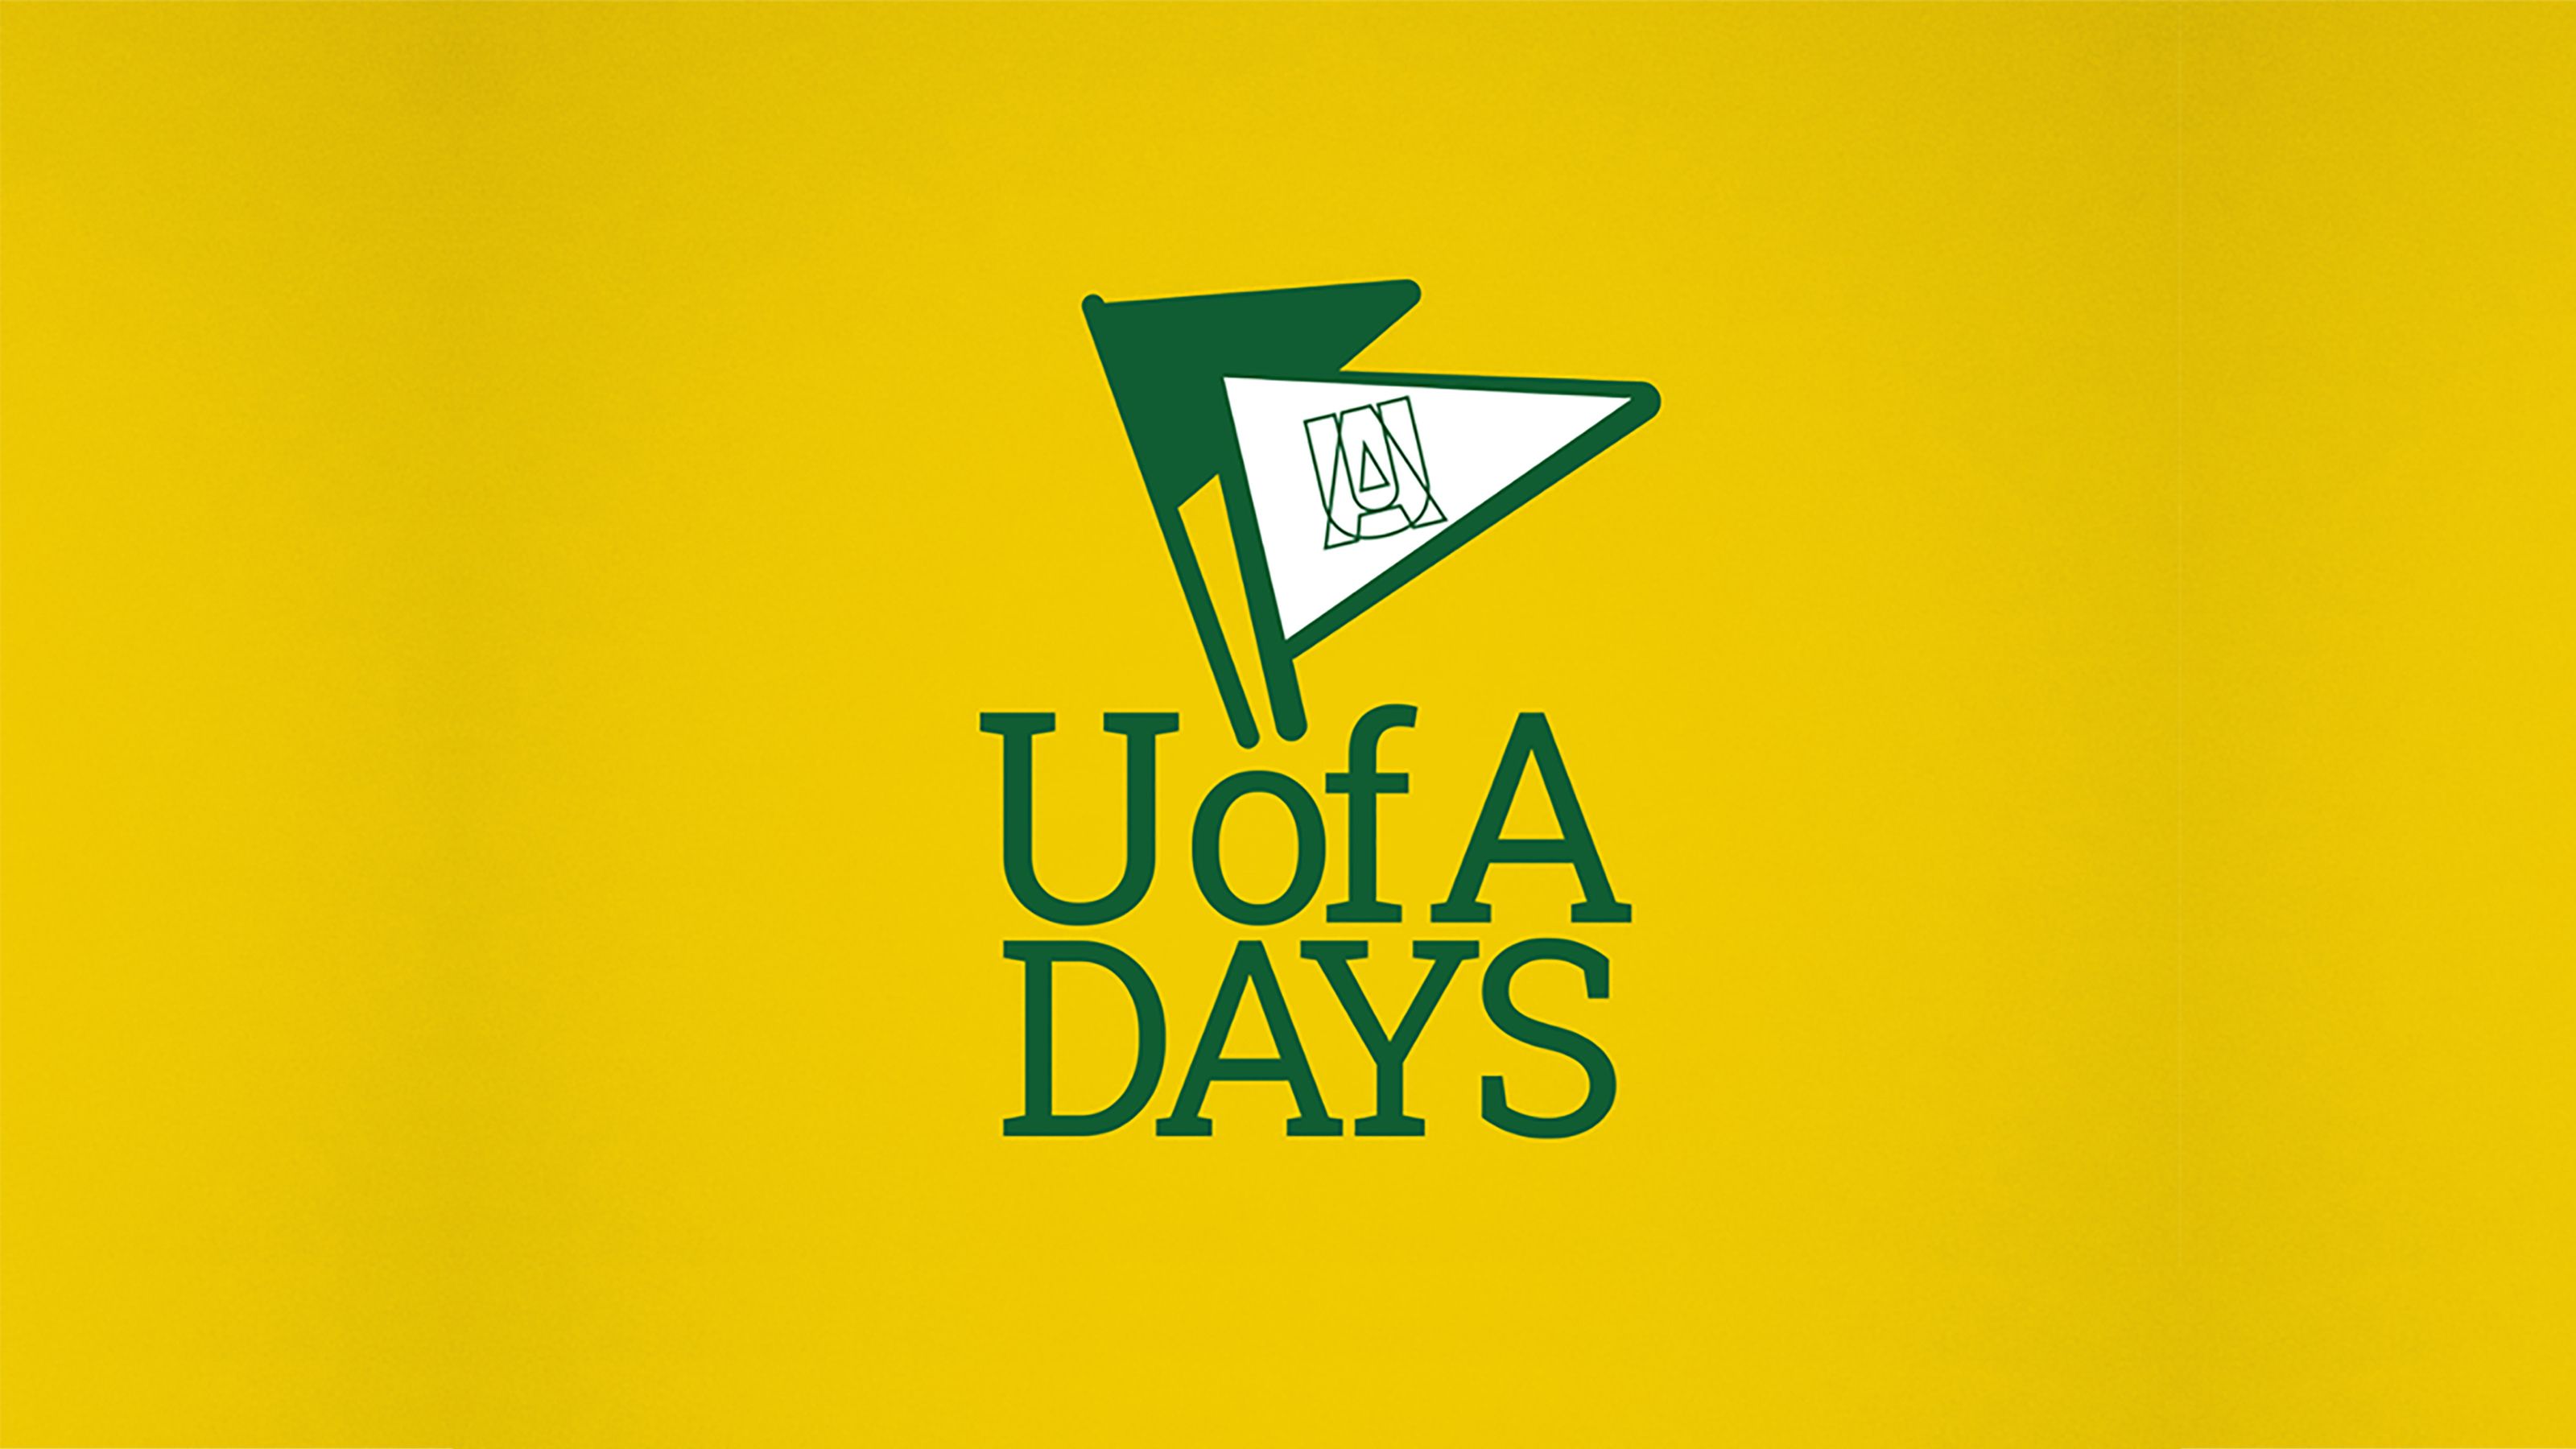 U of A Days, a community event for all. September 22-25